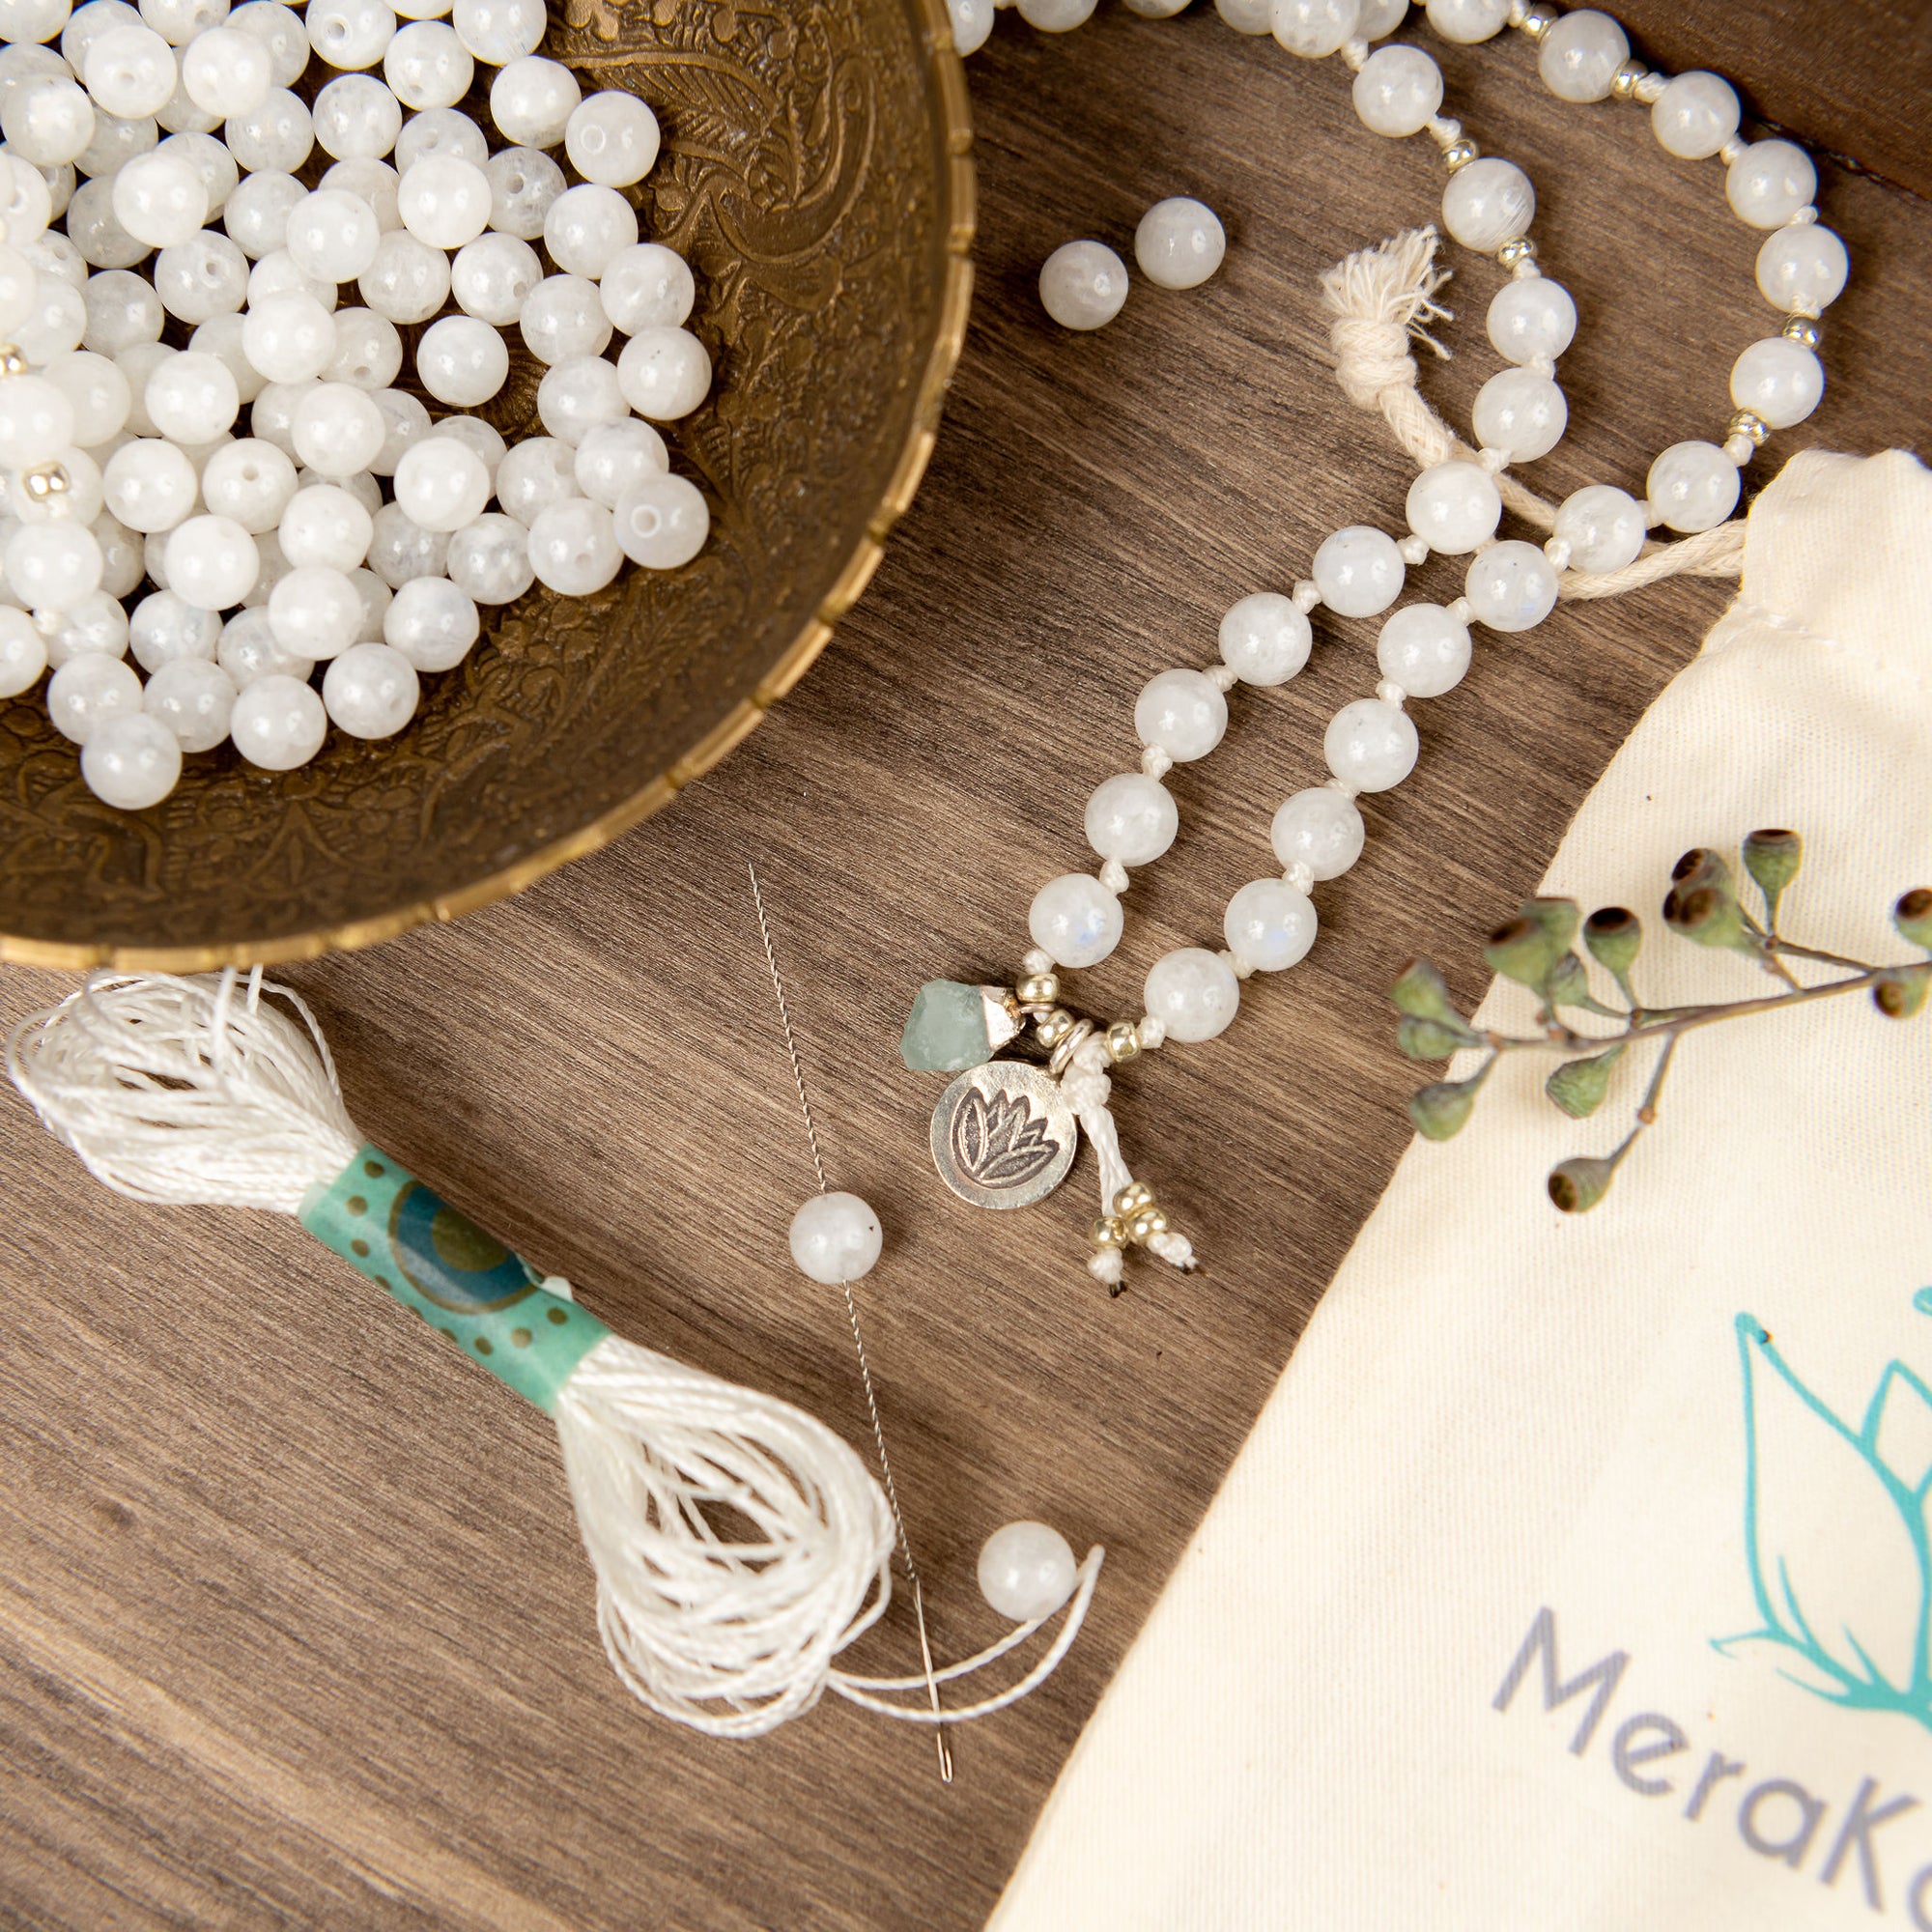 Learn How to Make Mala Beads - MeraKalpa Malas